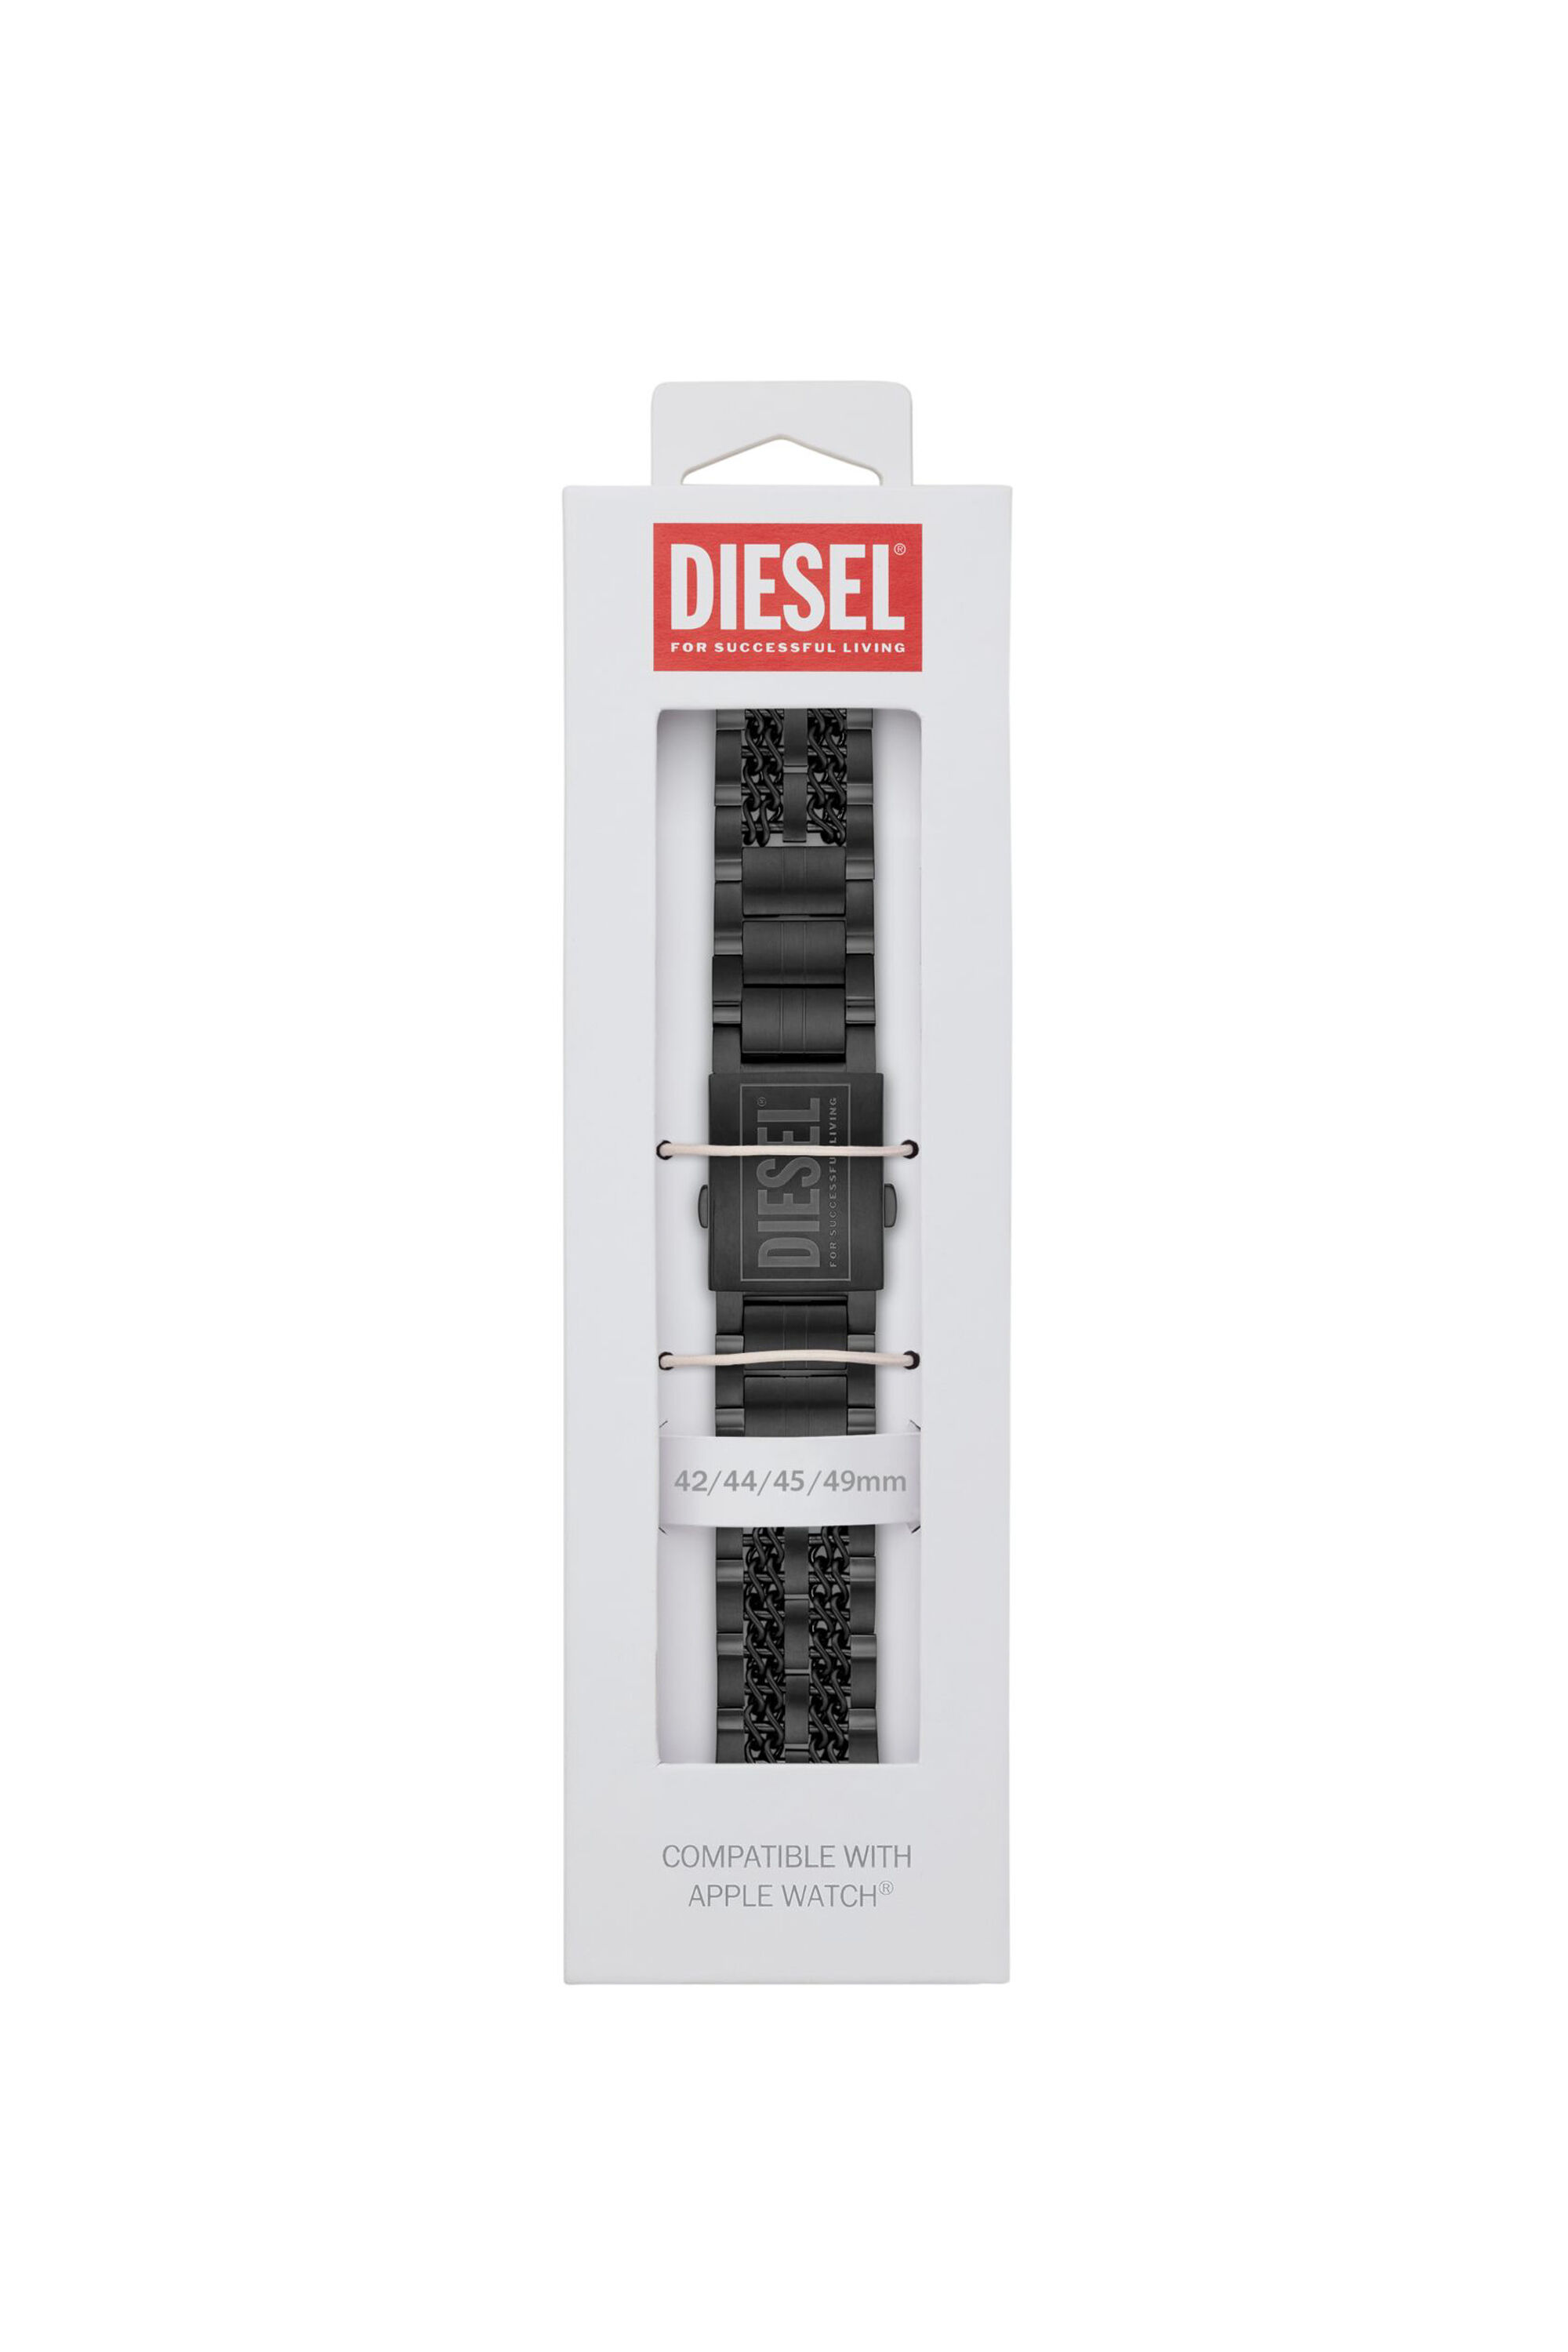 Diesel - DSS0019, ブラック - Image 3